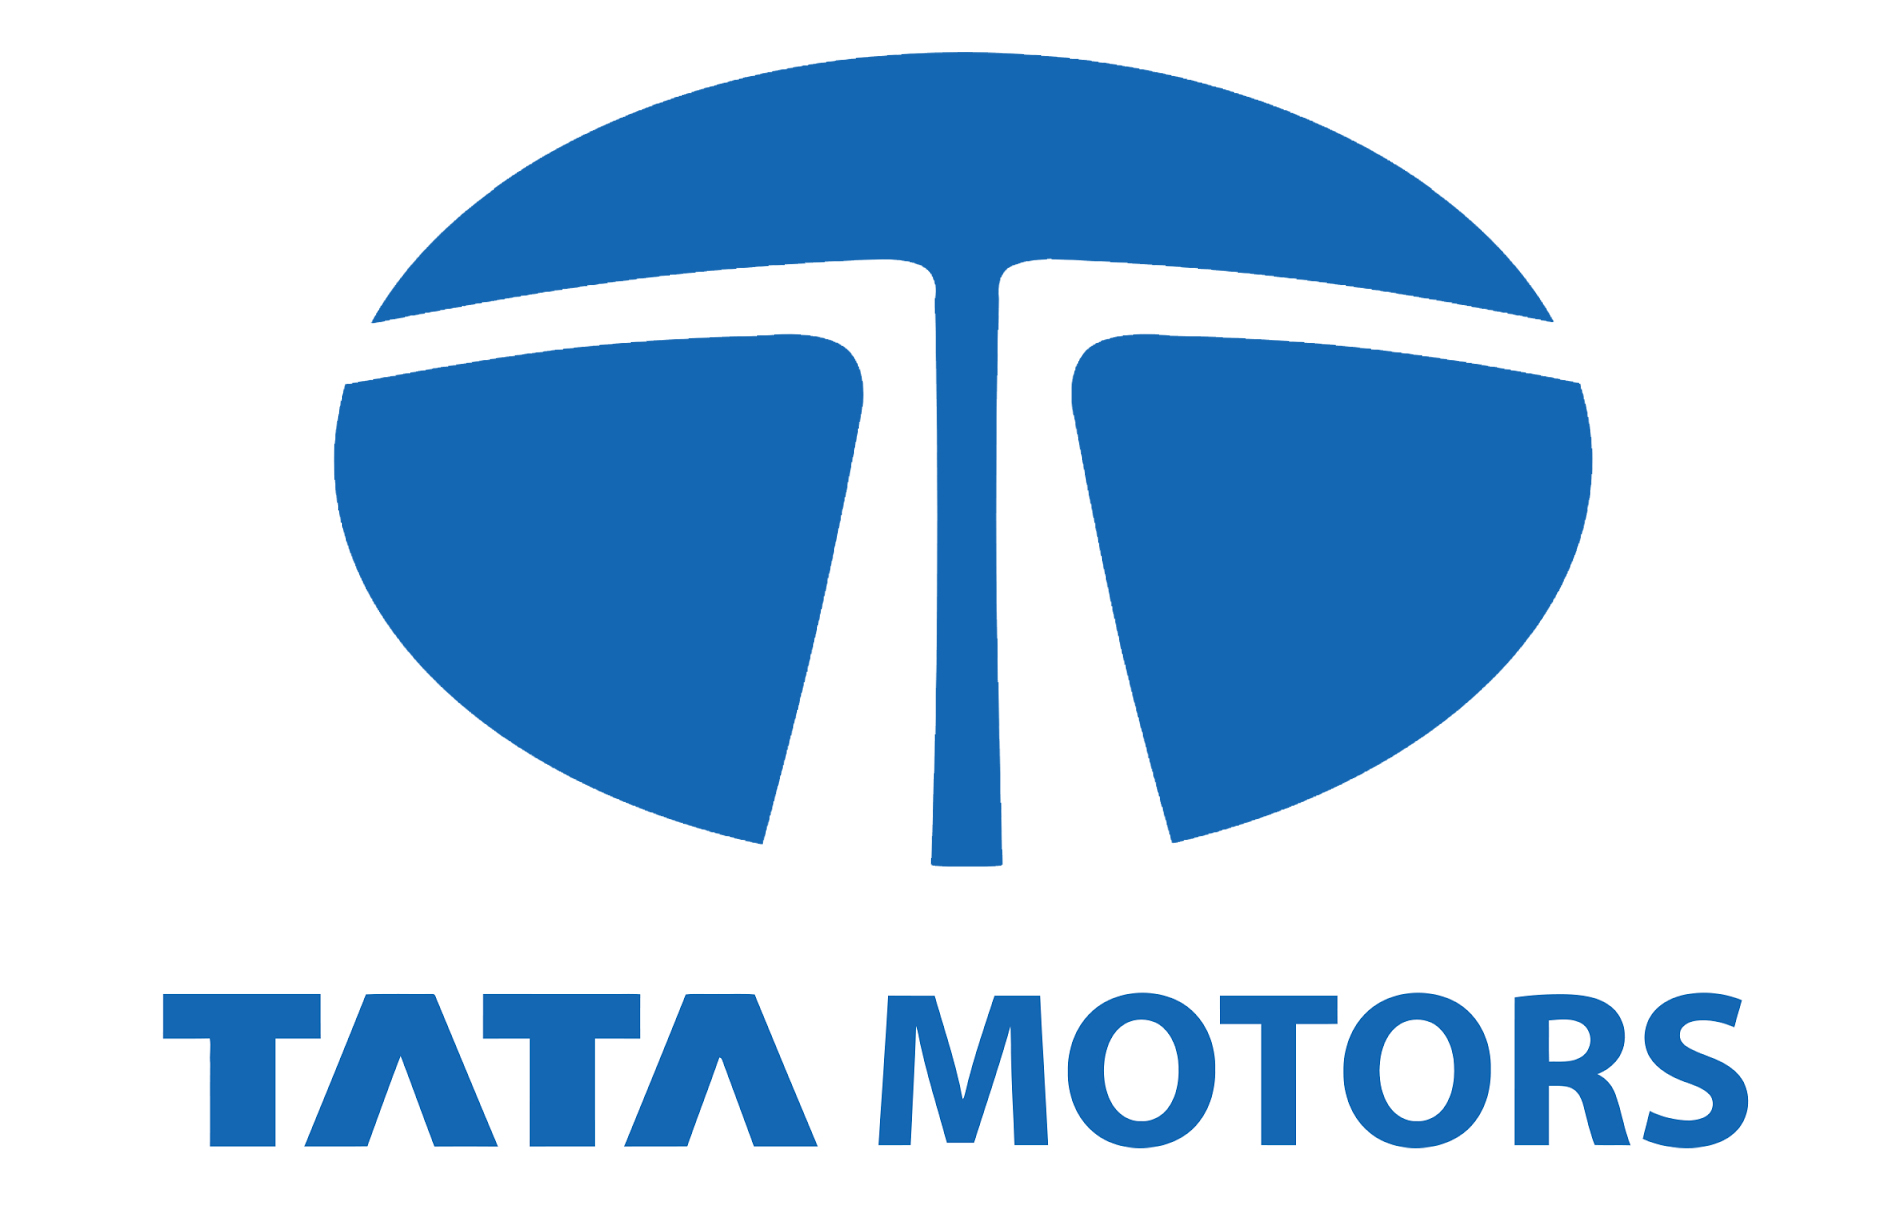 TaTa Motors Cars Showroom Frontier Motocorp Shahdol|Show Room|Automotive